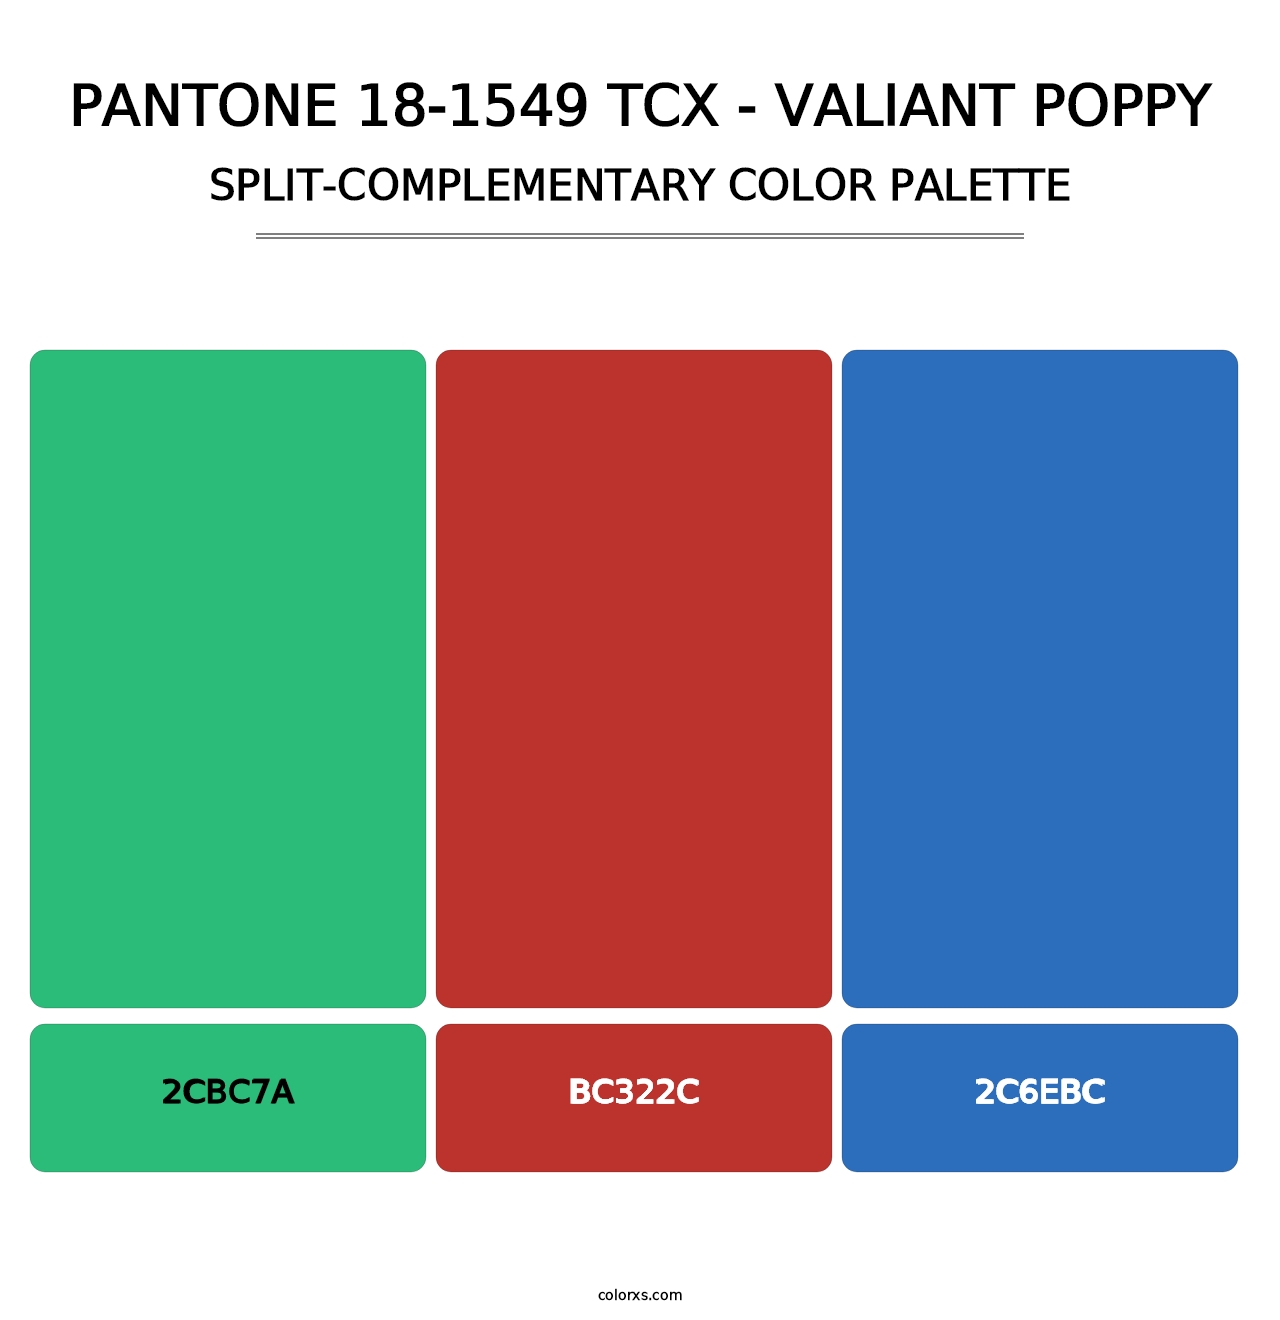 PANTONE 18-1549 TCX - Valiant Poppy - Split-Complementary Color Palette